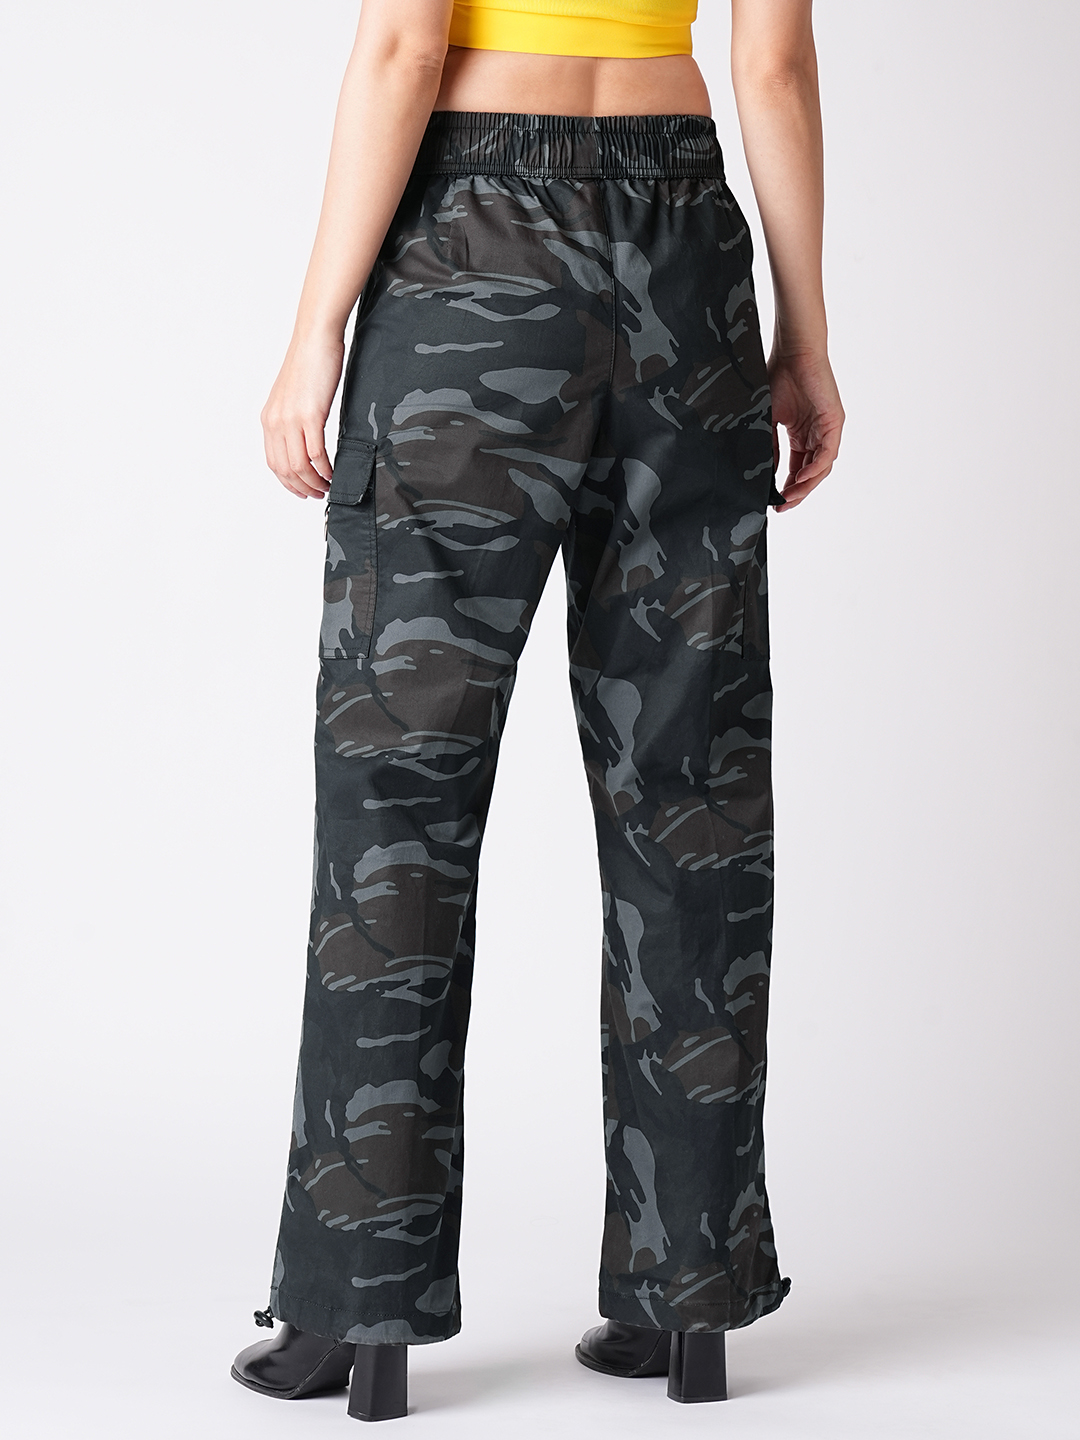 Globus Women Camo Camouflage Print Loose Fit Cargo Pant